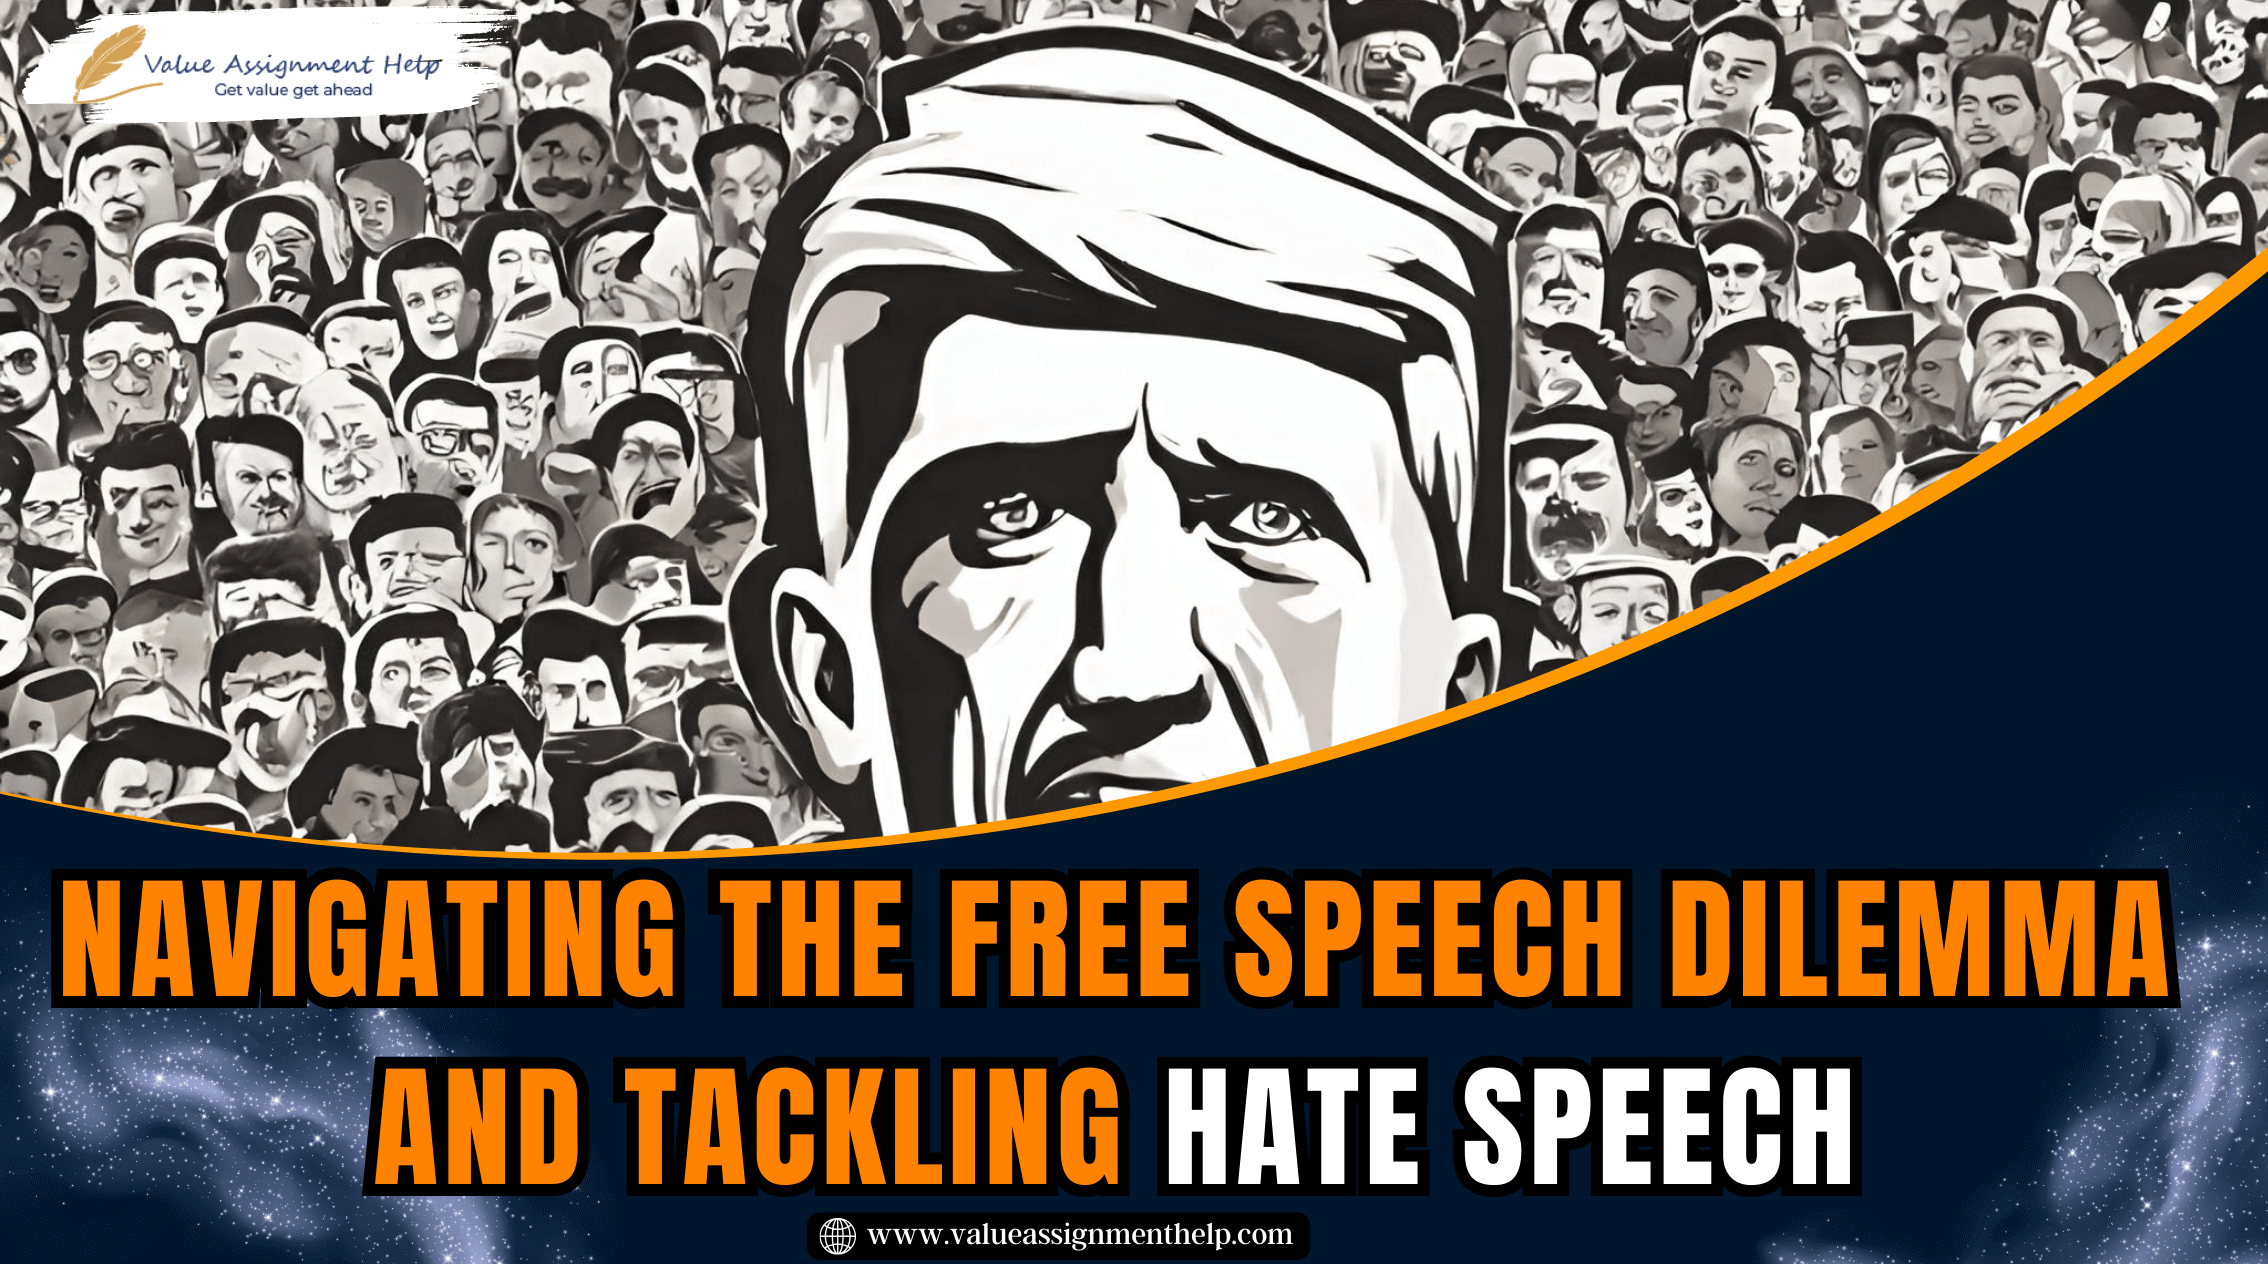  Navigating The Free Speech Dilemma and Tackling Hate Speech